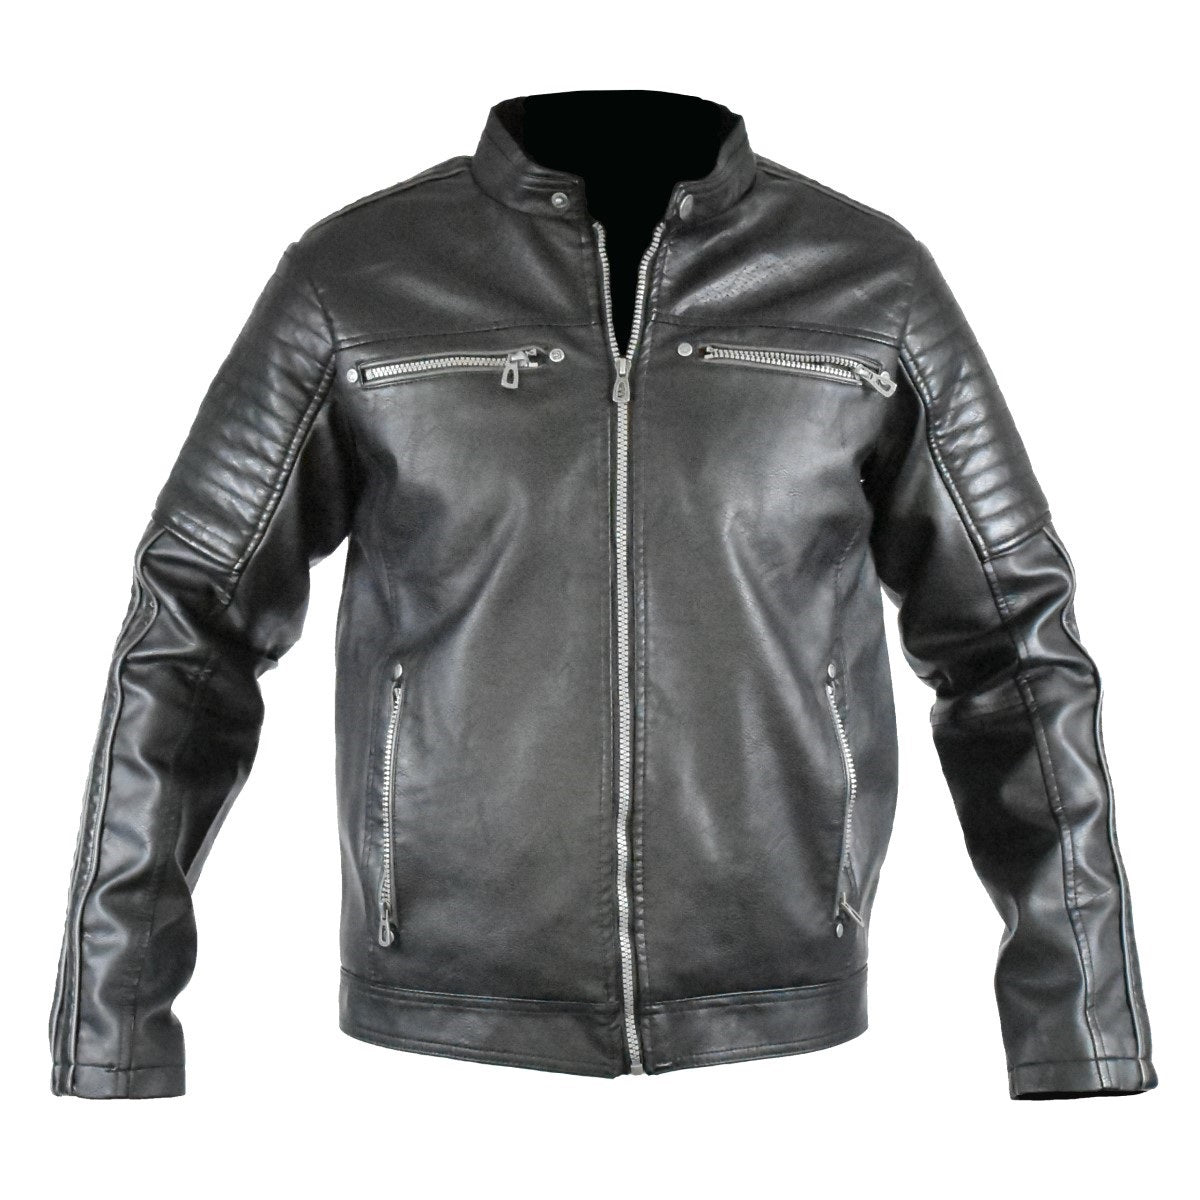 Chamarra para Hombre - TM-DI-001 Jacket Men – Nantli's - Online Store Footwear, Clothing and Accessories